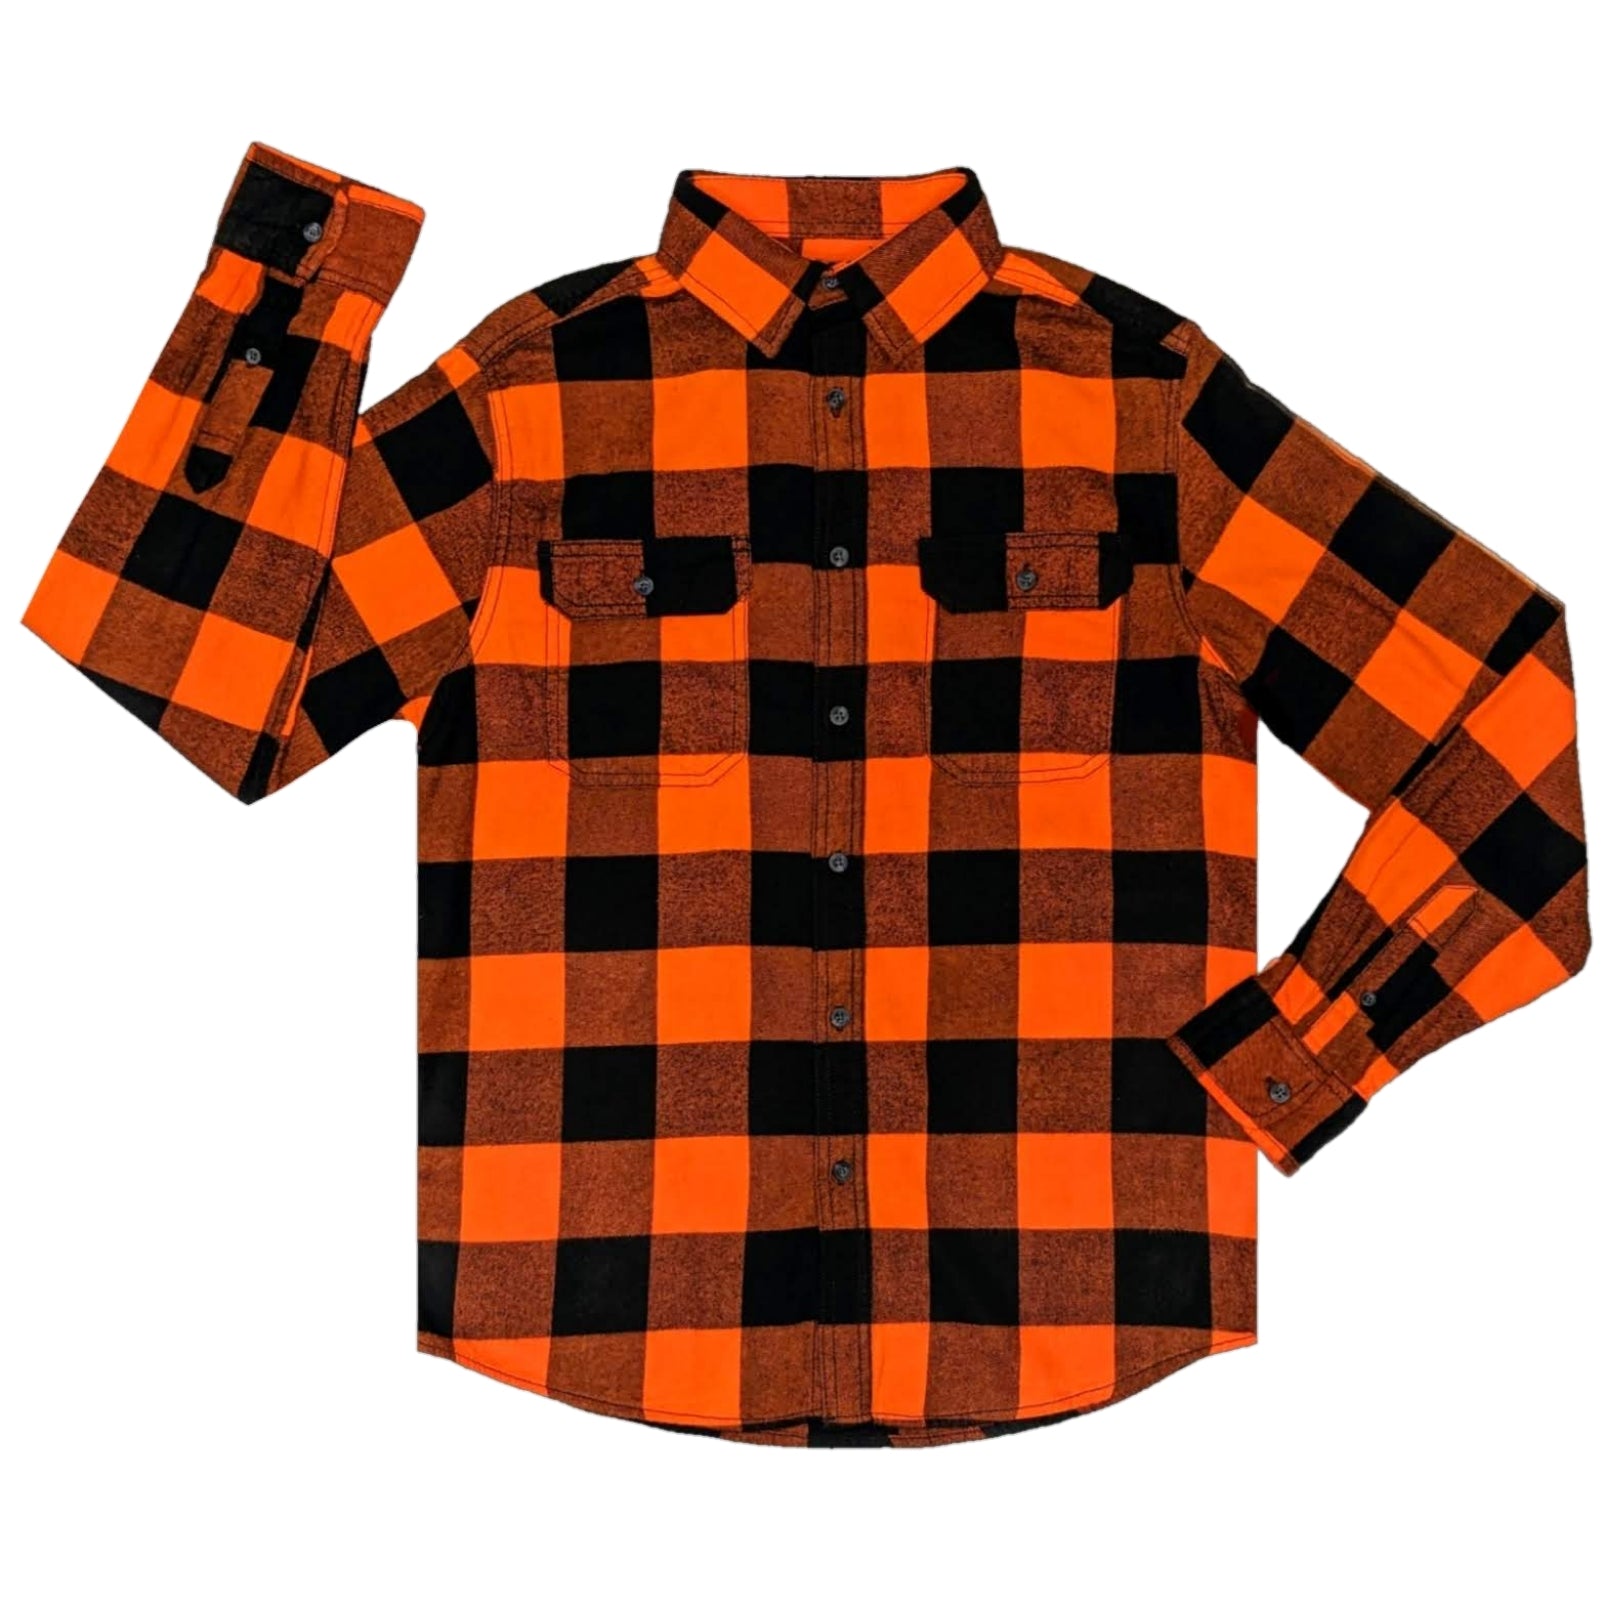 Men's Neon Orange and Black Buffalo Plaid Flannel Shirt Handmade by Kollideoscope